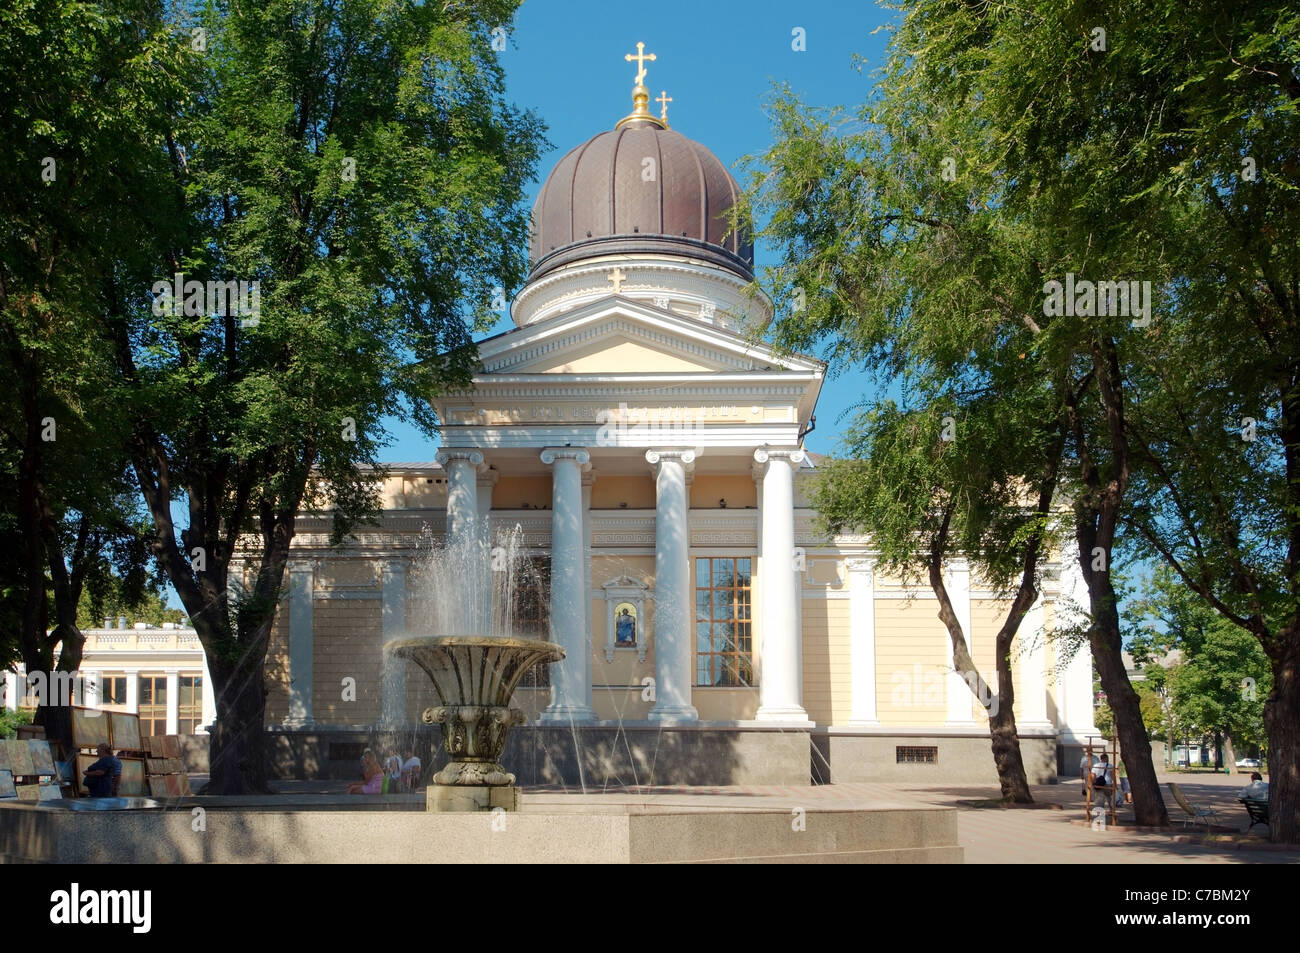 Cathédrale Orthodoxe d'Odessa ou Cathédrale Spaso-preobrajensky, Odessa, Ukraine, Europe Banque D'Images